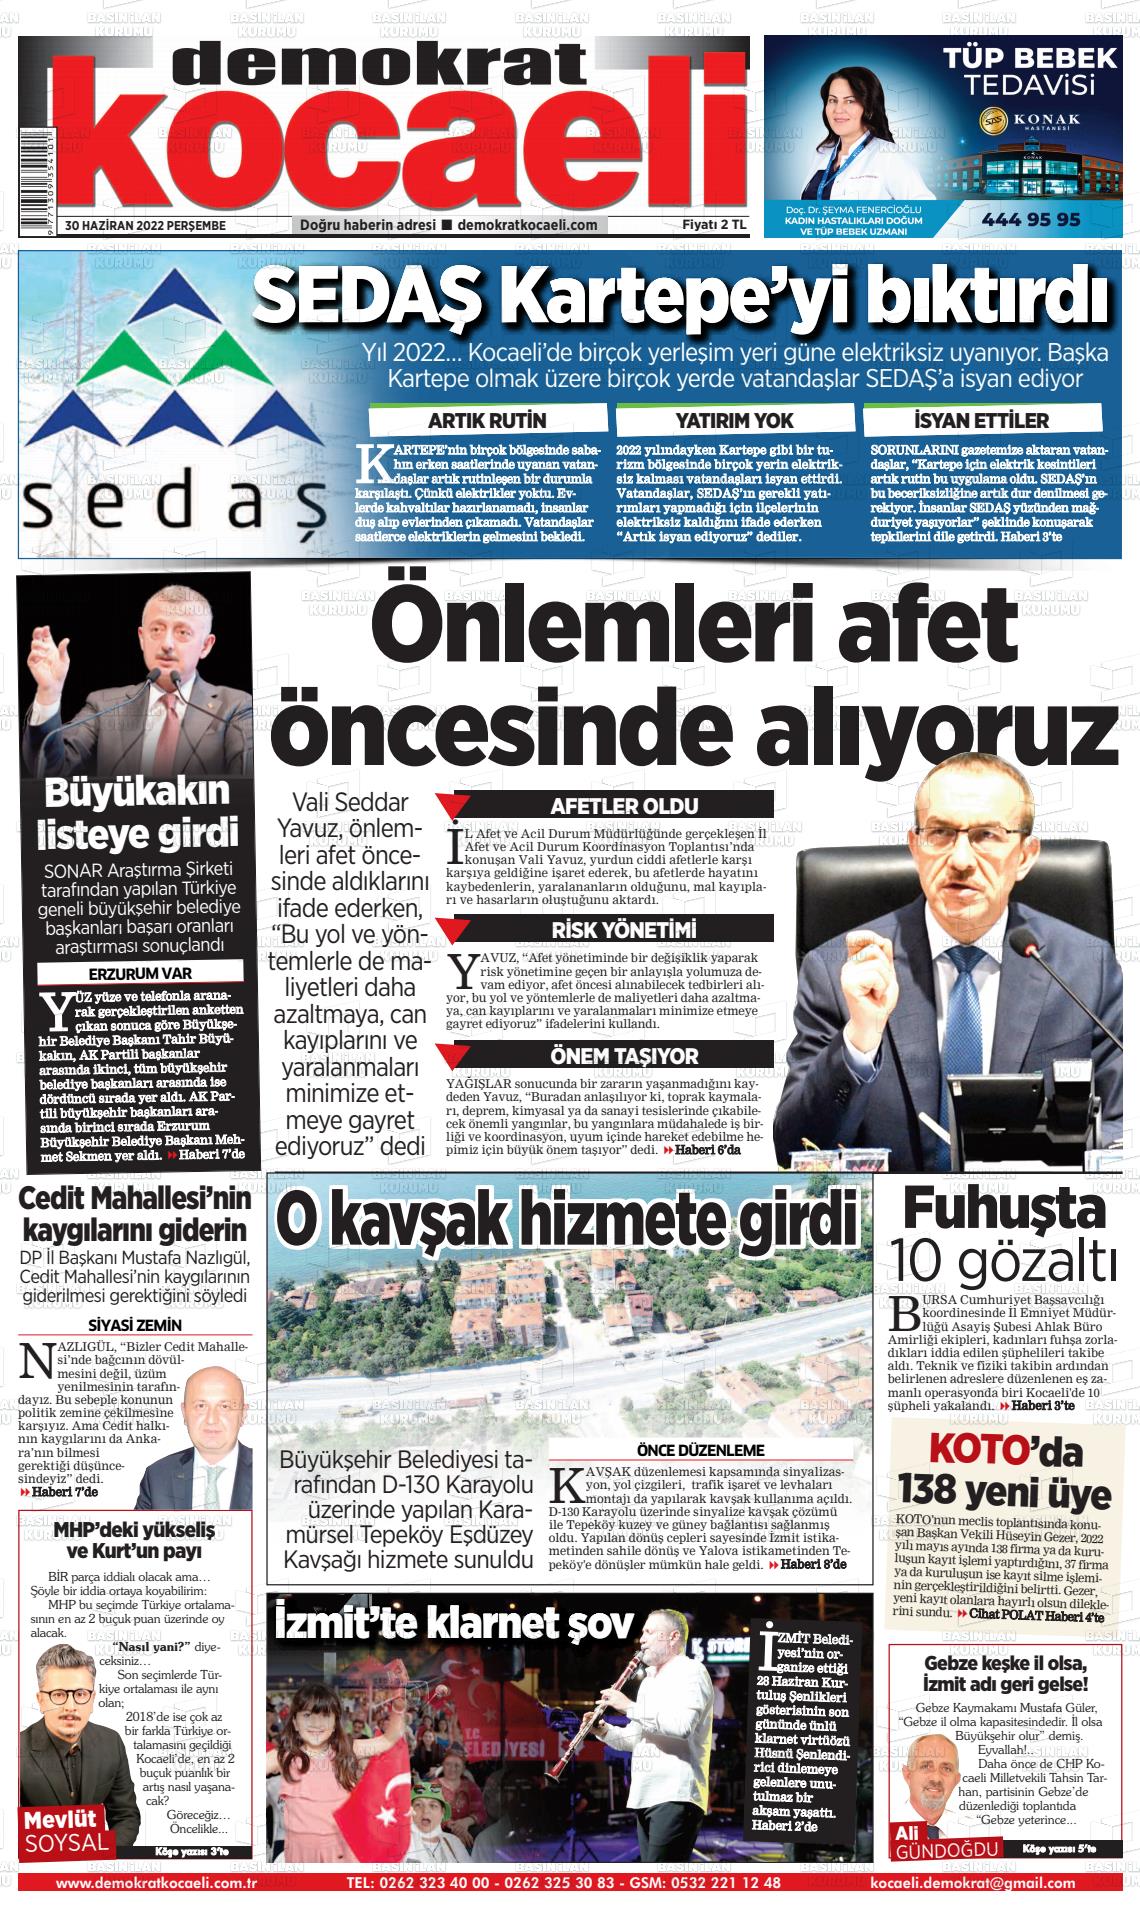 02 Temmuz 2022 Demokrat Kocaeli Gazete Manşeti